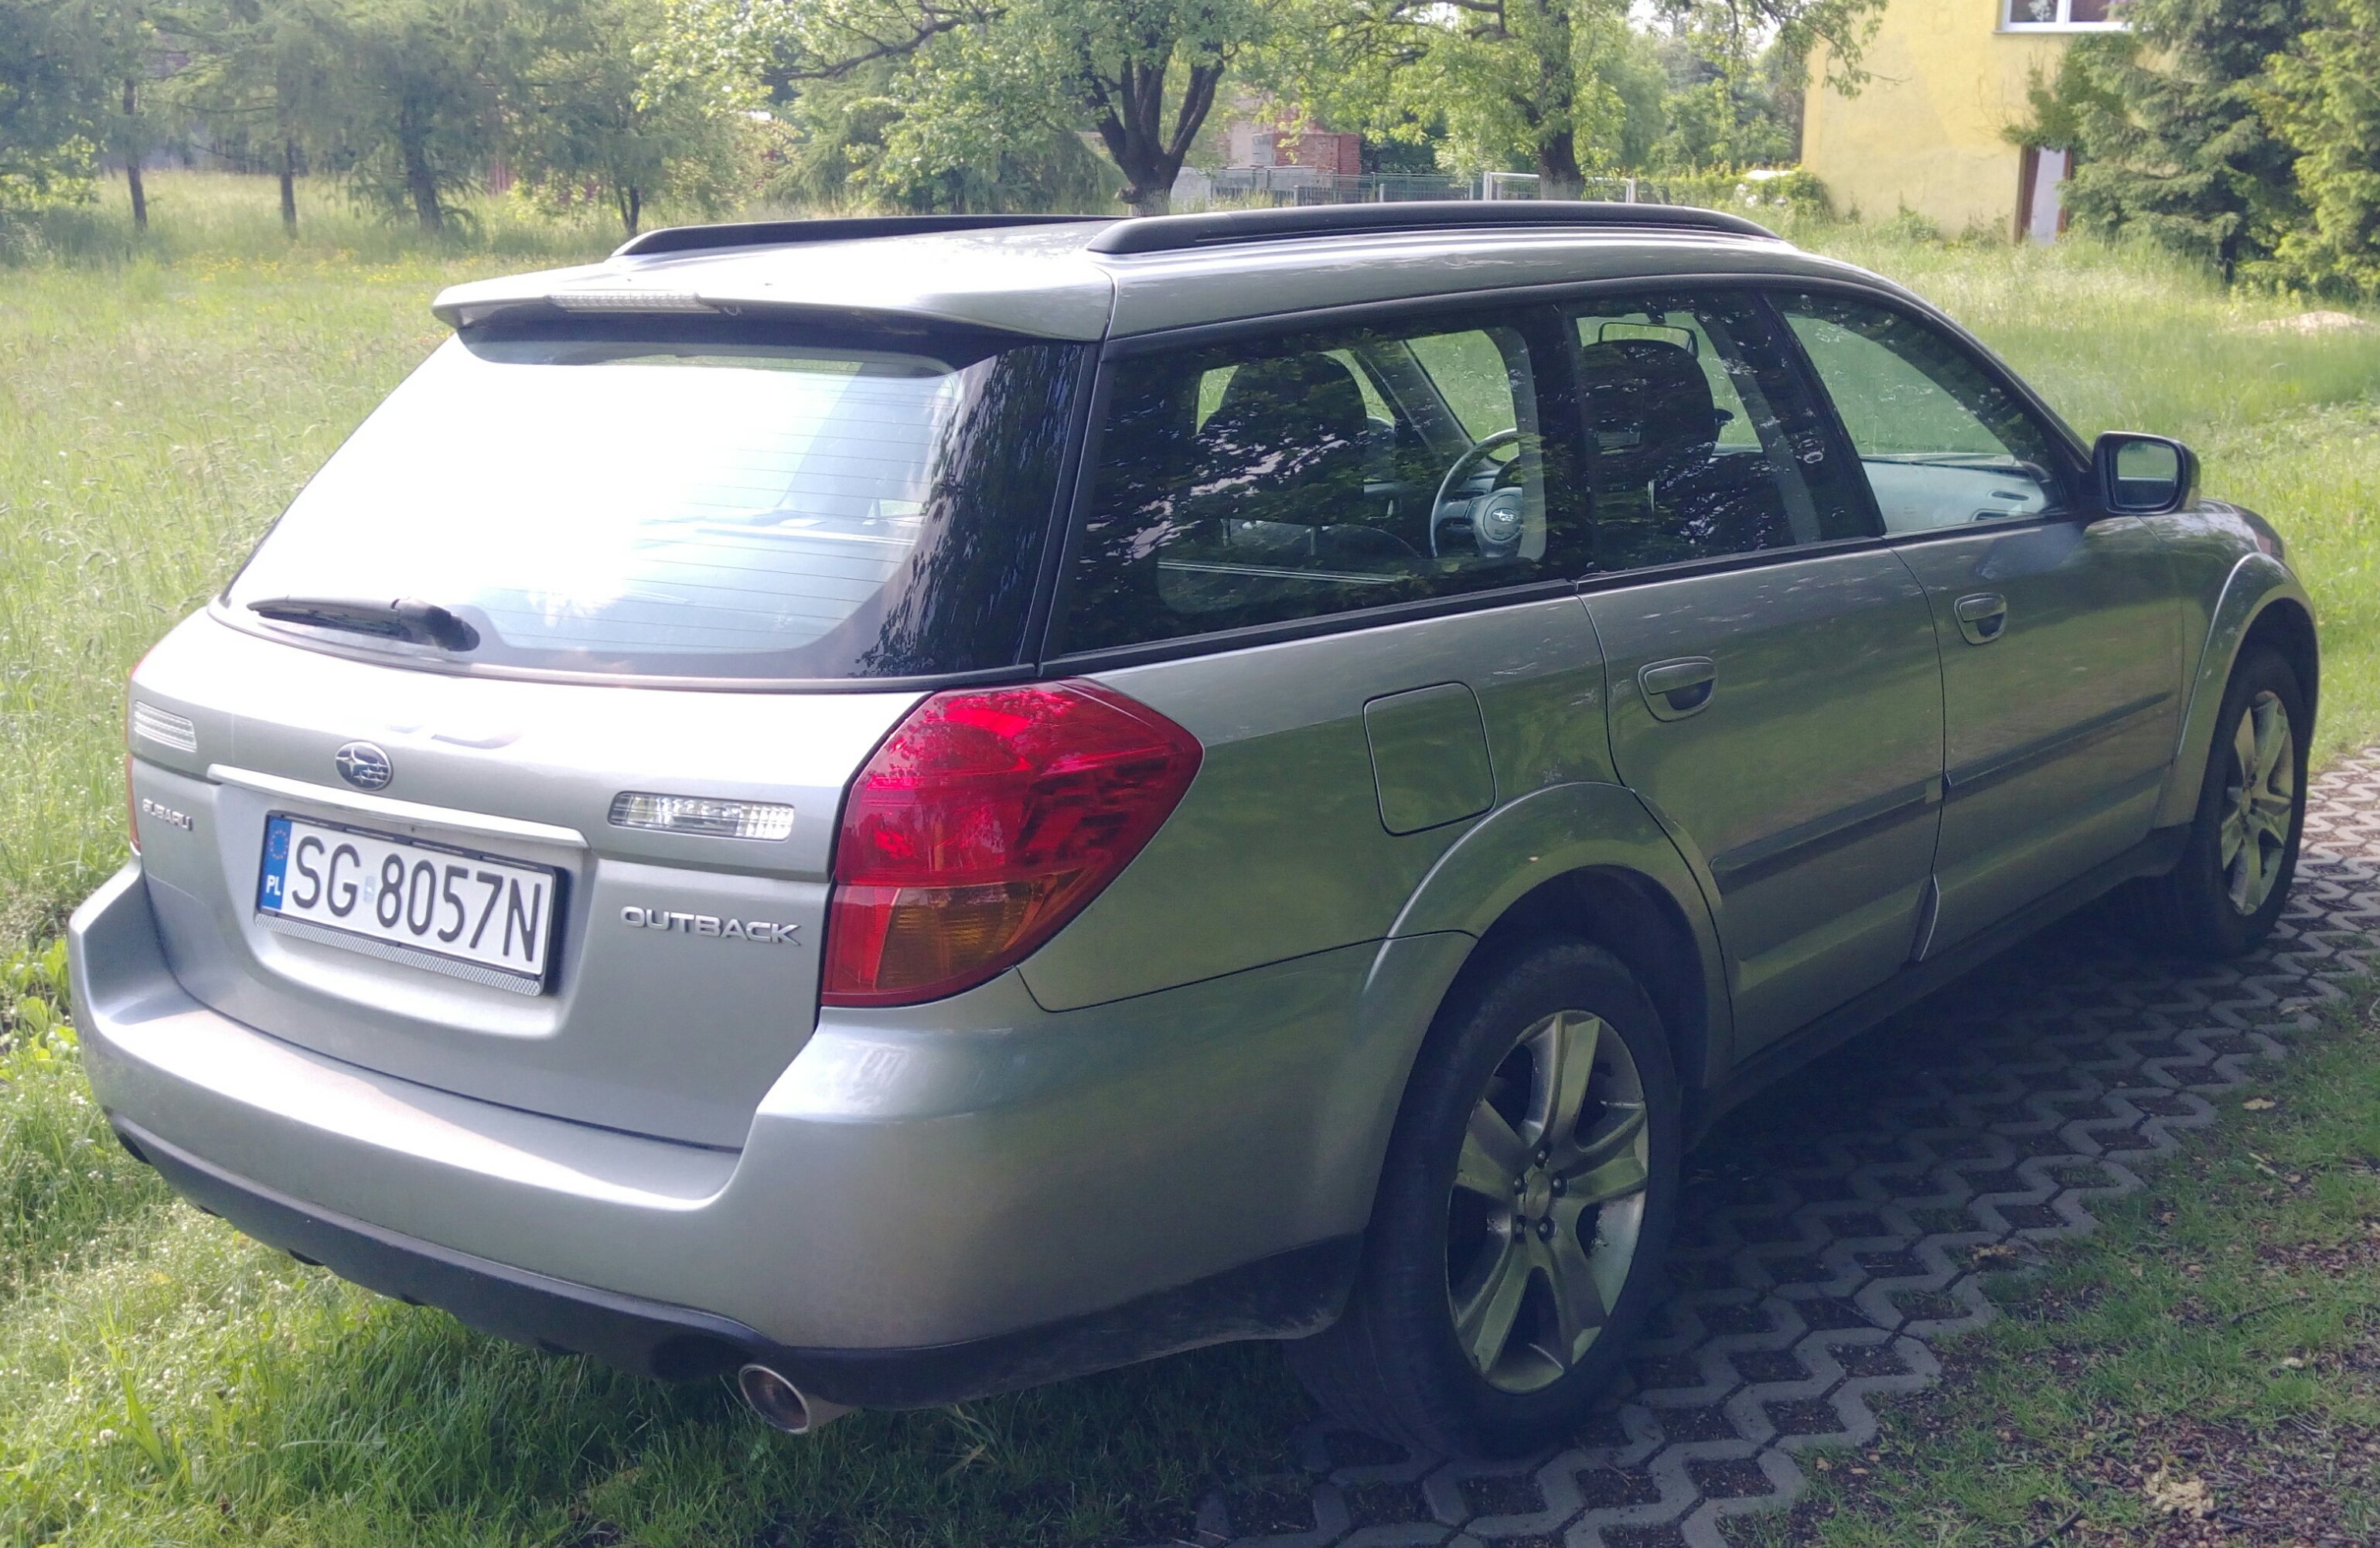 S] Subaru Outback 2006R, 2.5 Lpg. - Forum Subaru